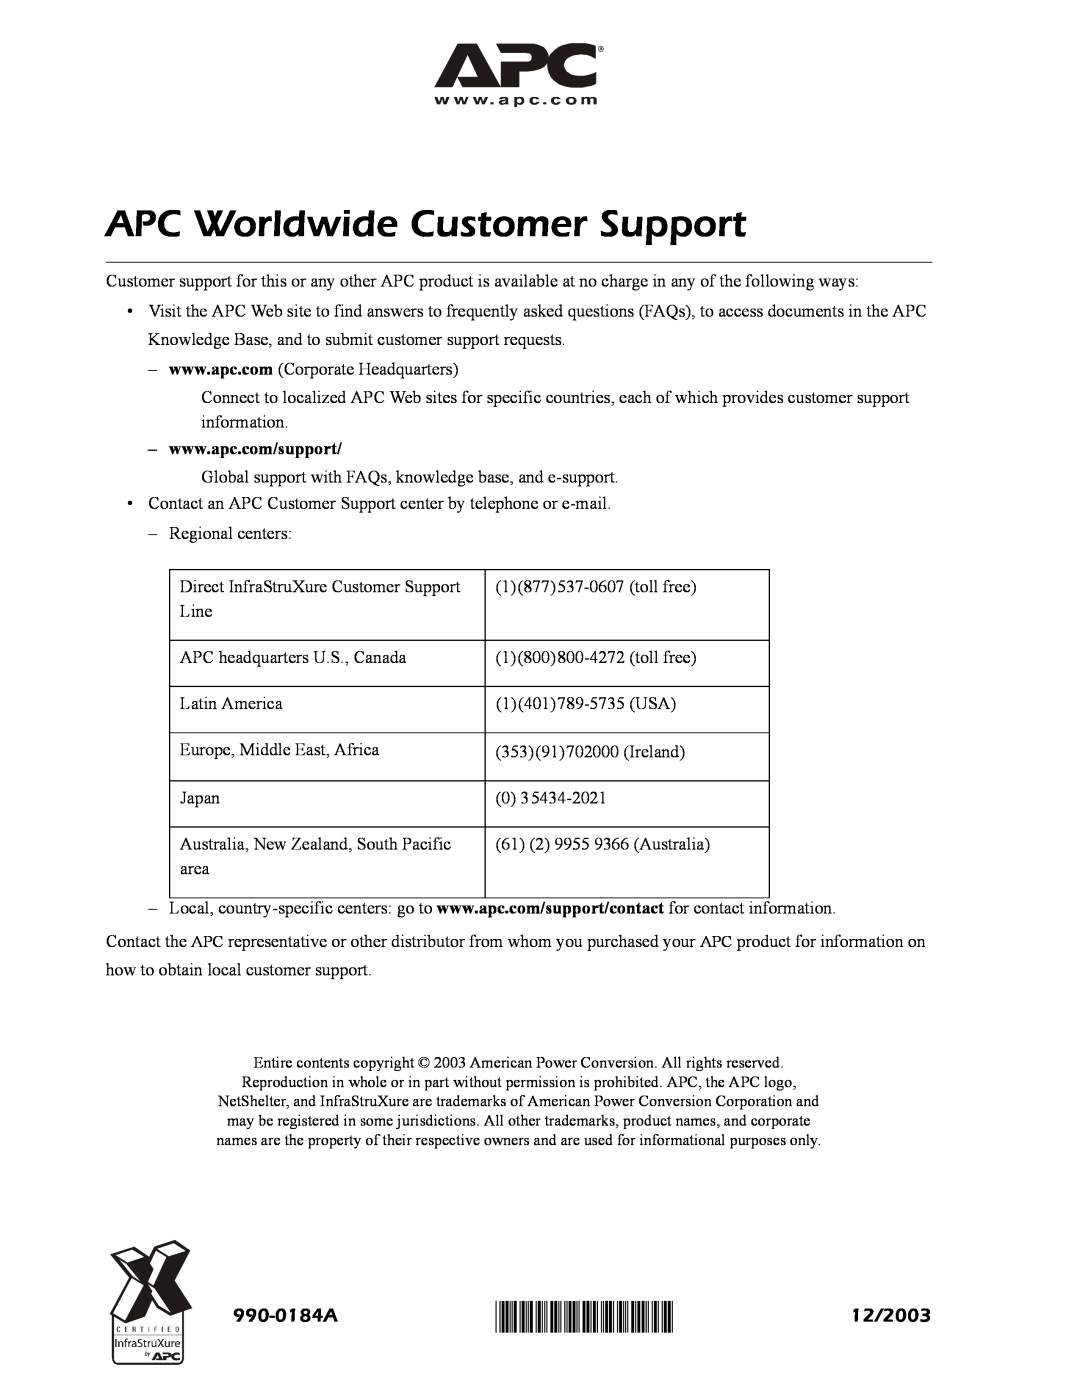 APC AR8113A instruction sheet 990-0184A, 12/2003, APC Worldwide Customer Support 